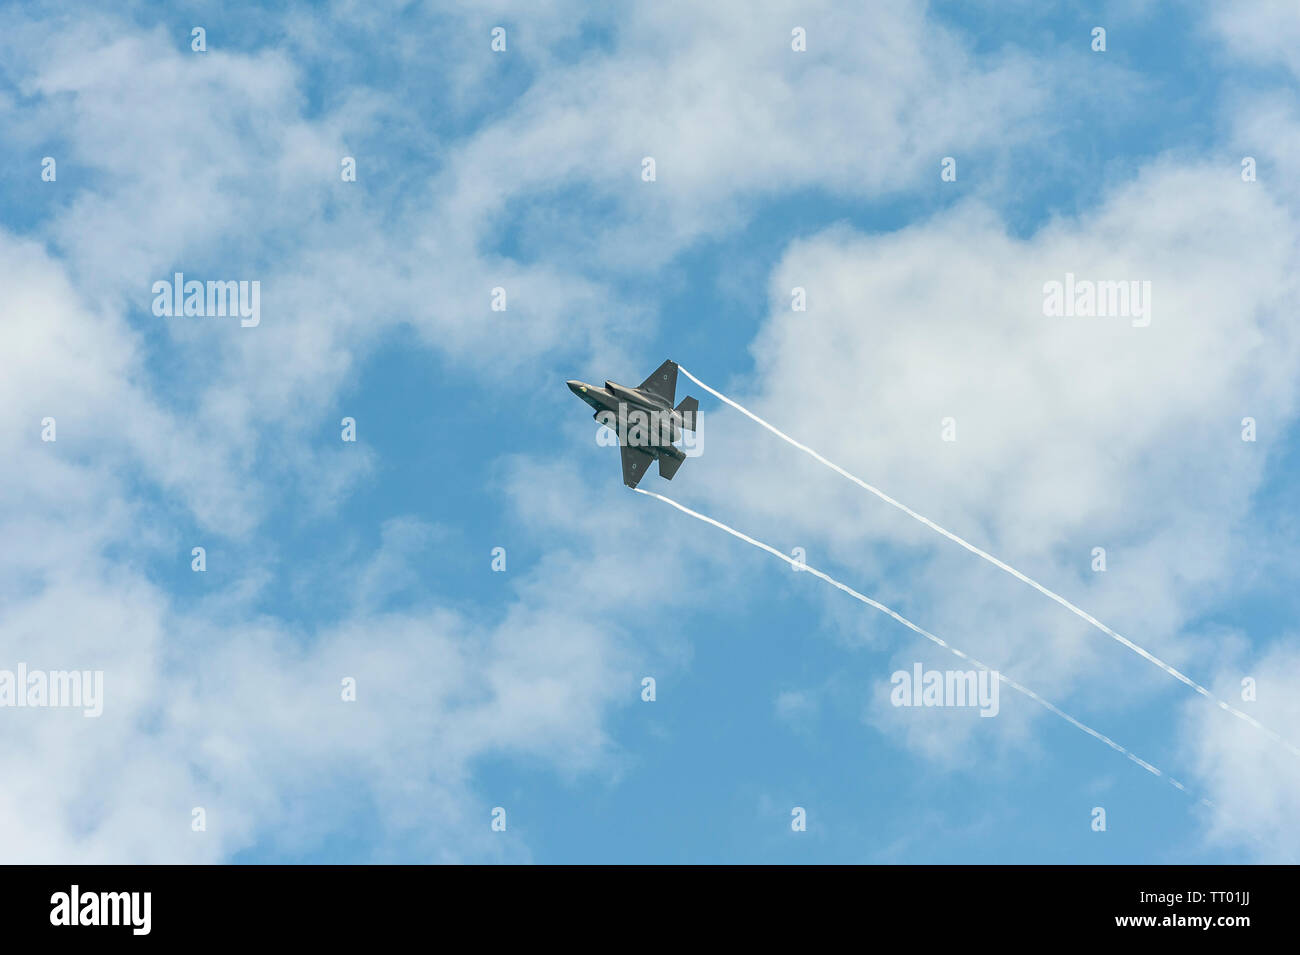 Israel, Tel Aviv-Yafo - 09 May 2019: Yom haatzmaout 2019 - Israel's independence day 71 - airshow: Lockheed Martin F-35 Lightning II doing acrobatics Stock Photo